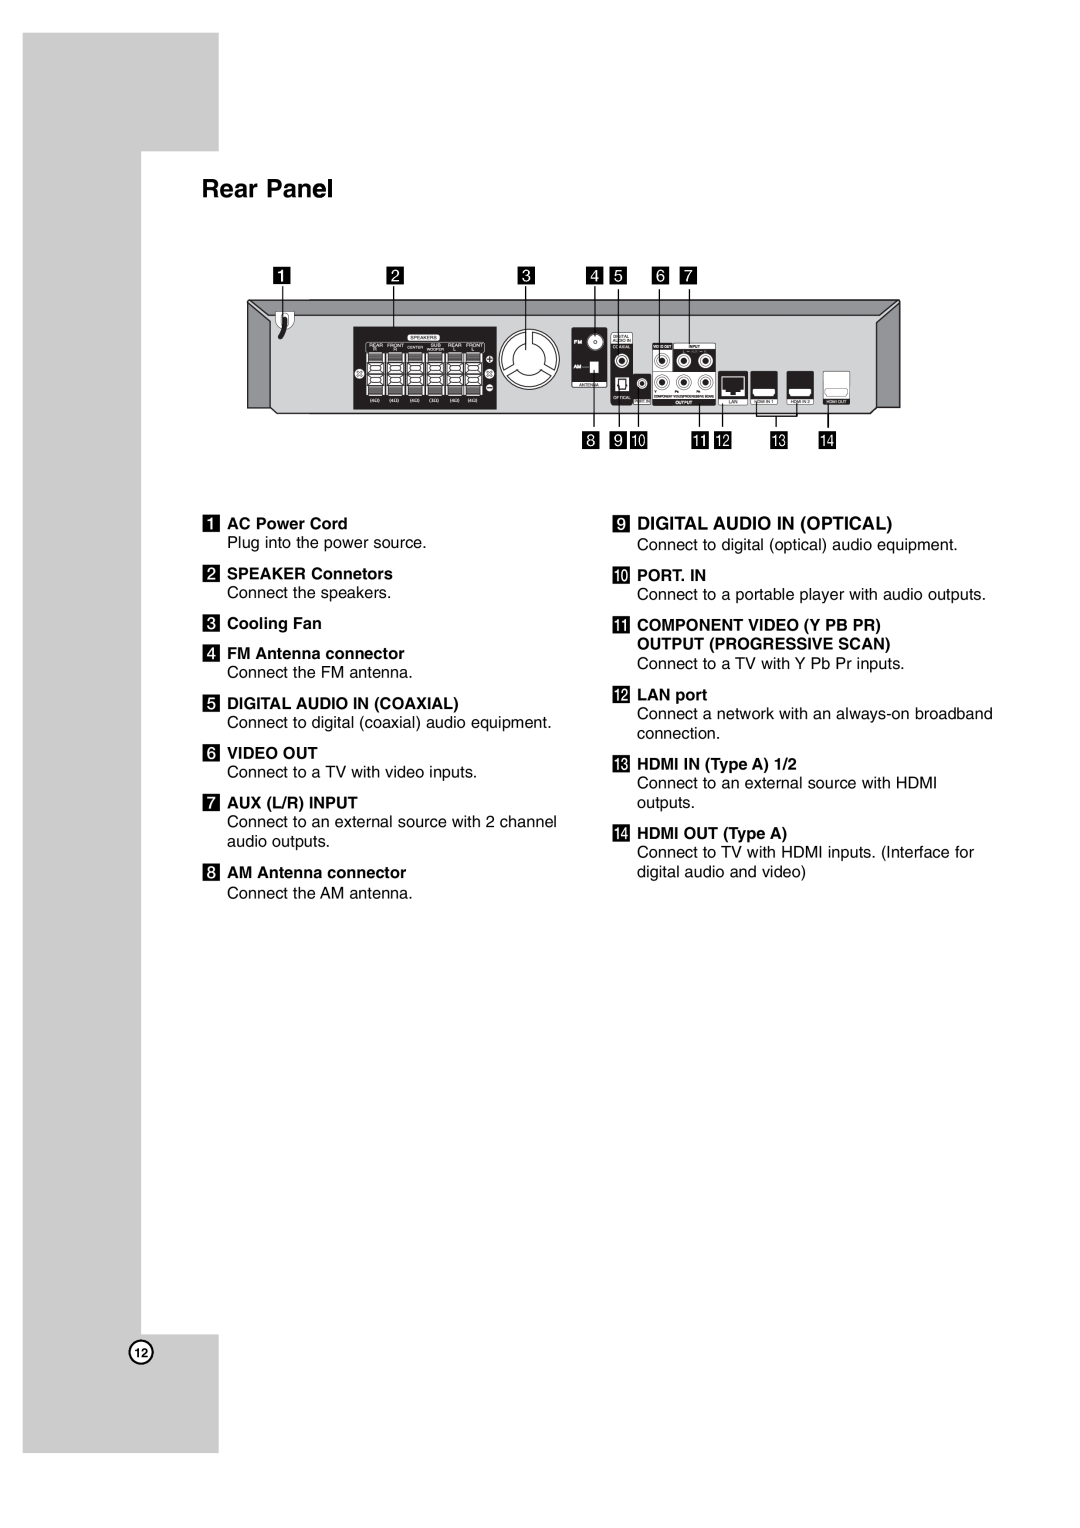 JVC LVT2099-029A Rear Panel, i DIGITAL AUDIO IN OPTICAL, c de f g, a AC Power Cord, b SPEAKER Connetors, c Cooling Fan 